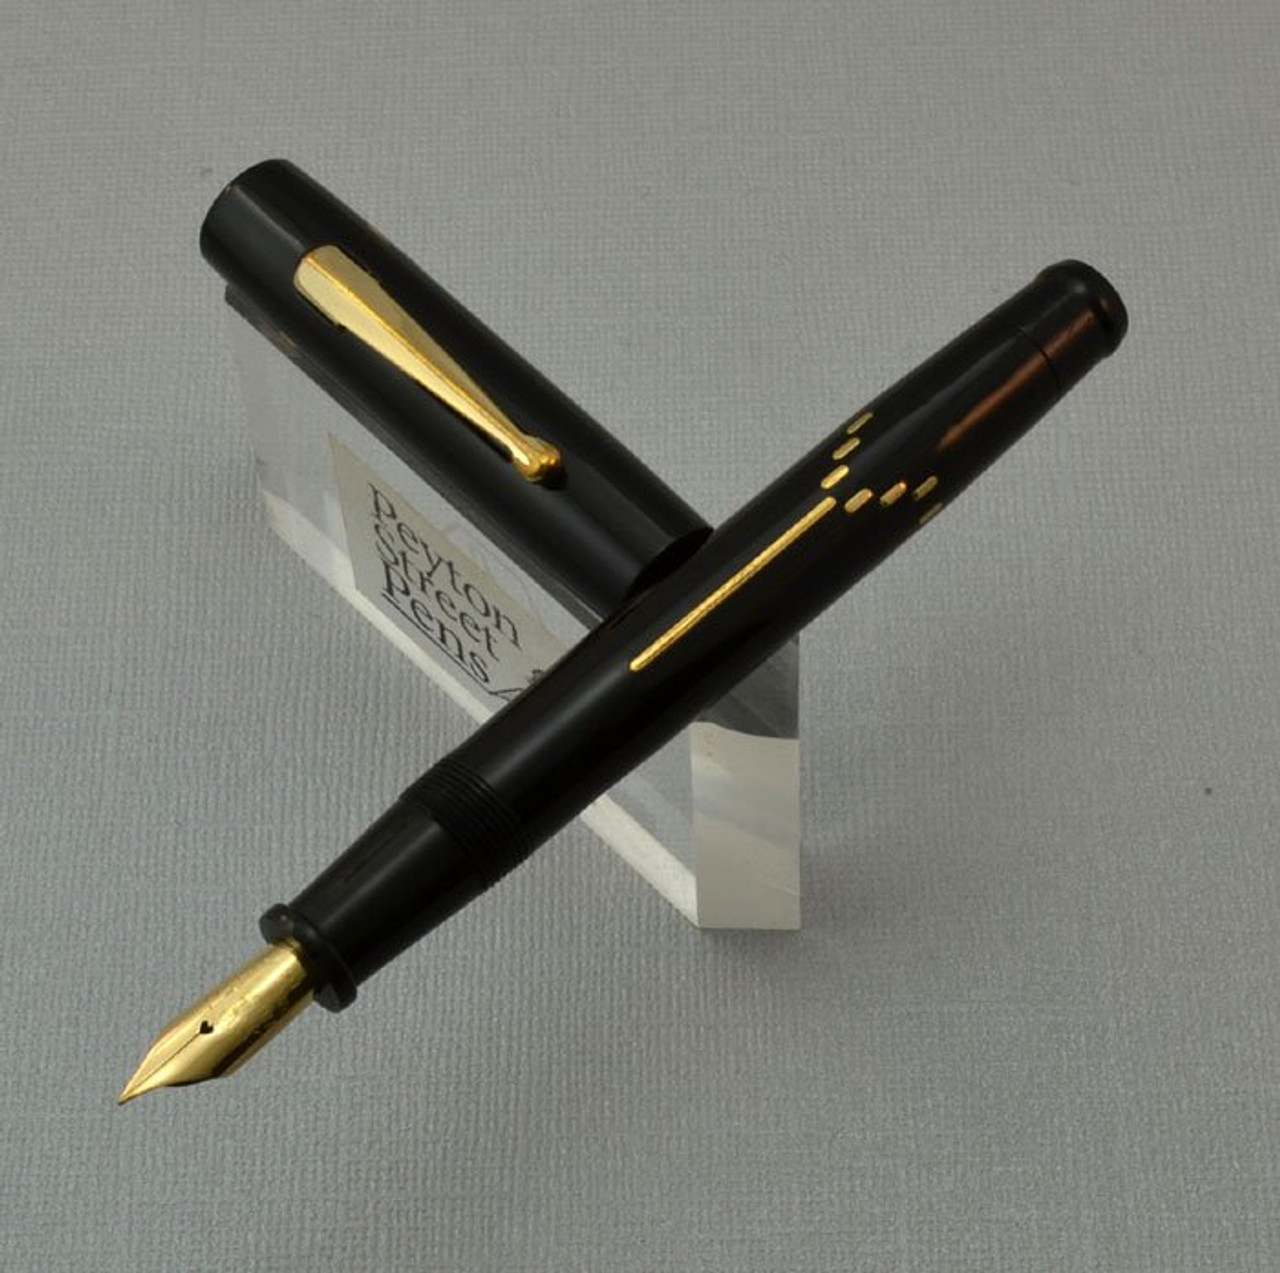 Chilton Wing-Flow Fountain Pen - Full Size, A5 Inlay Design, Black, Fine Flex Nib (Restored)